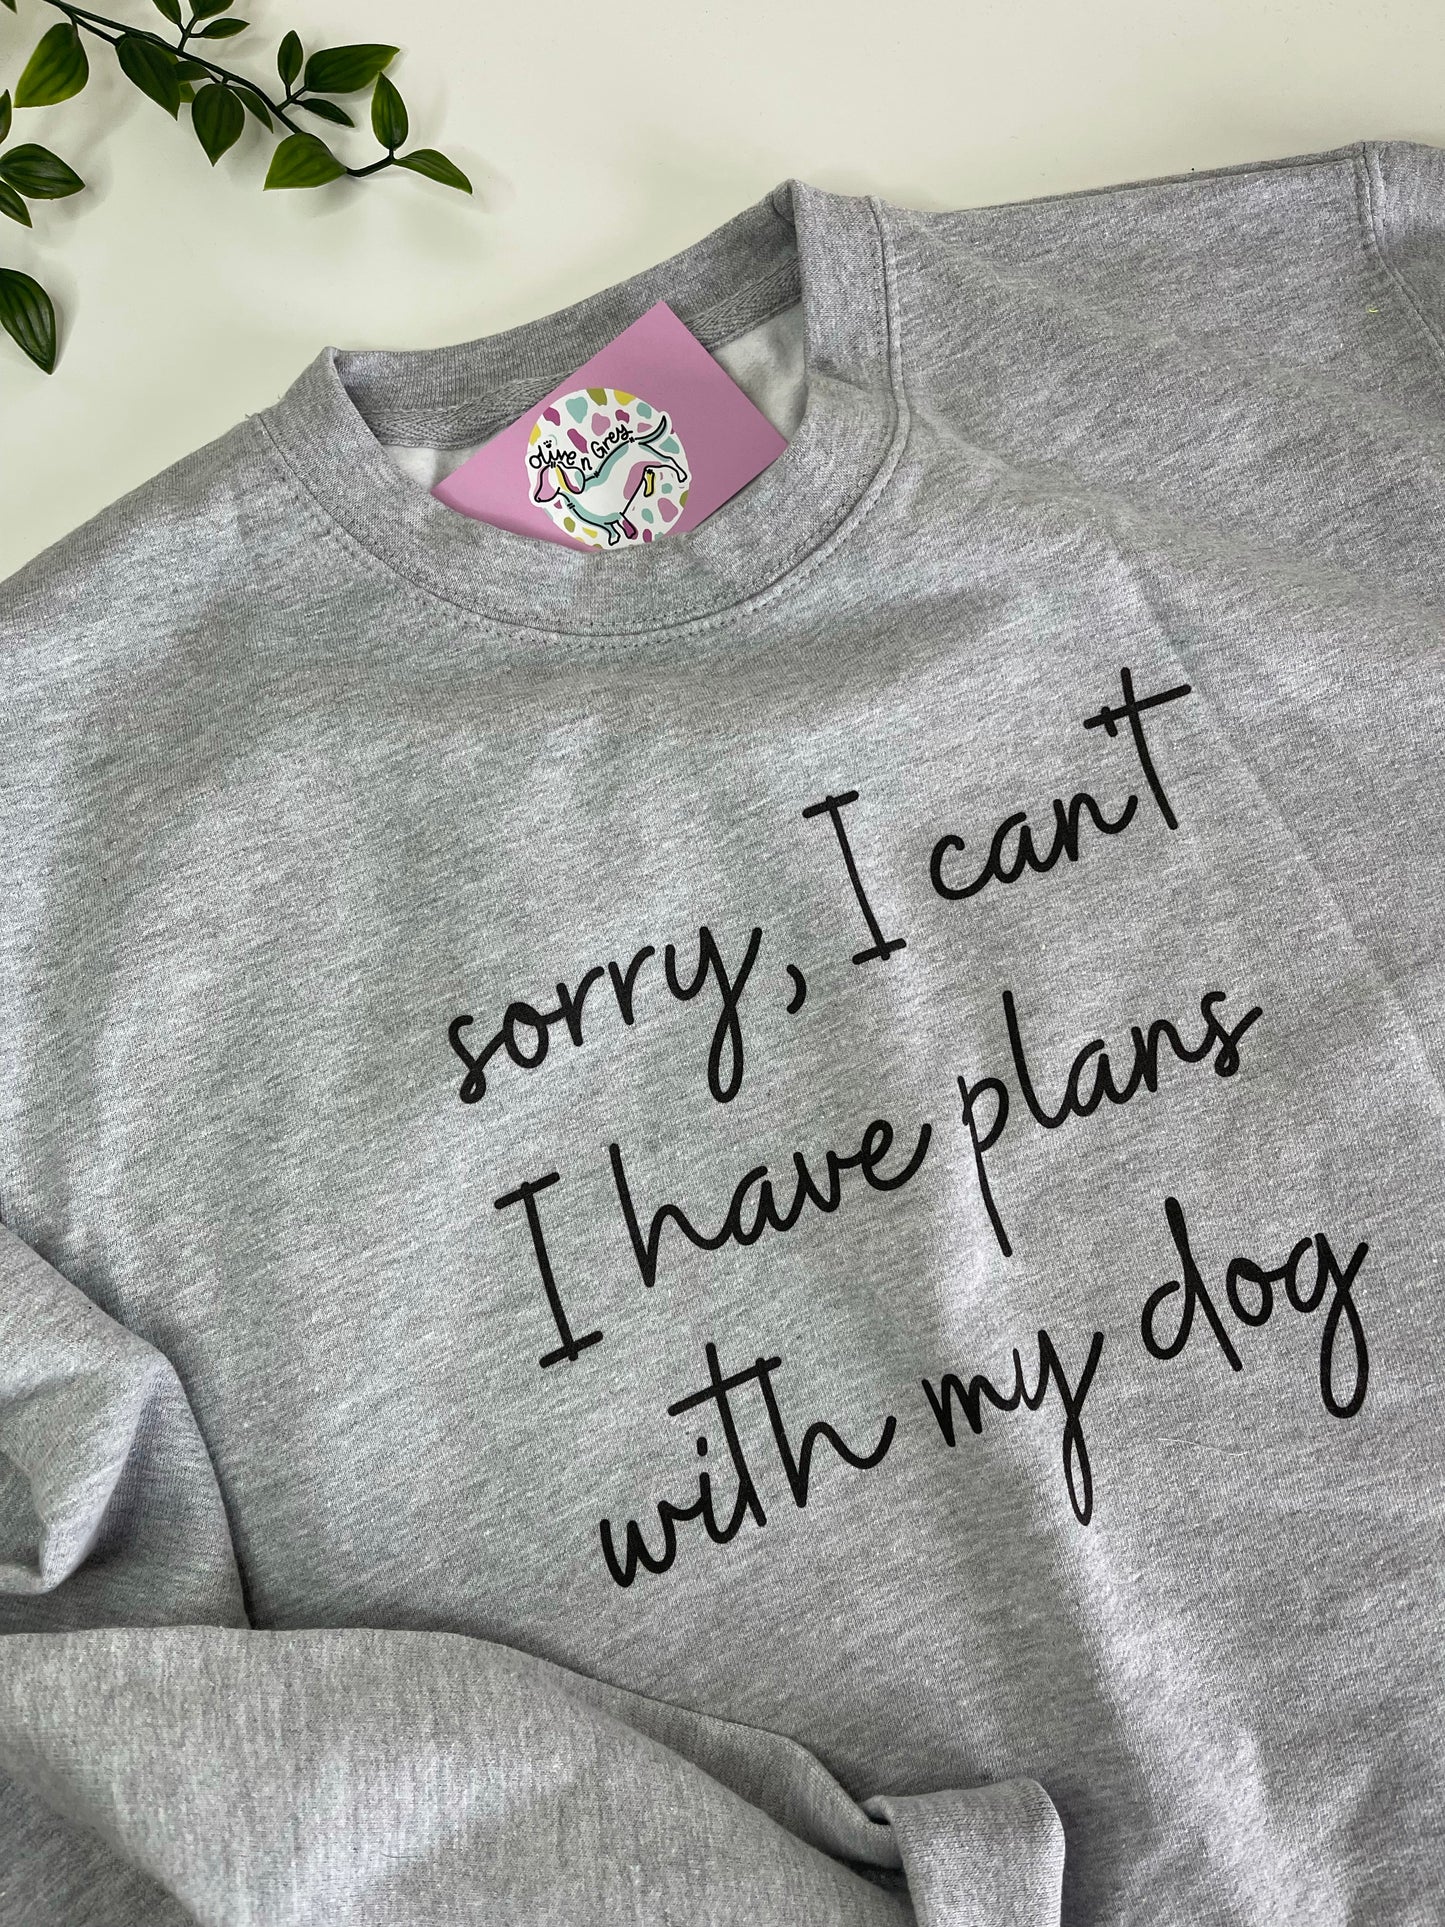 Sorry I can't I have plans with my Dog Sweatshirt, Heather Grey - Medium